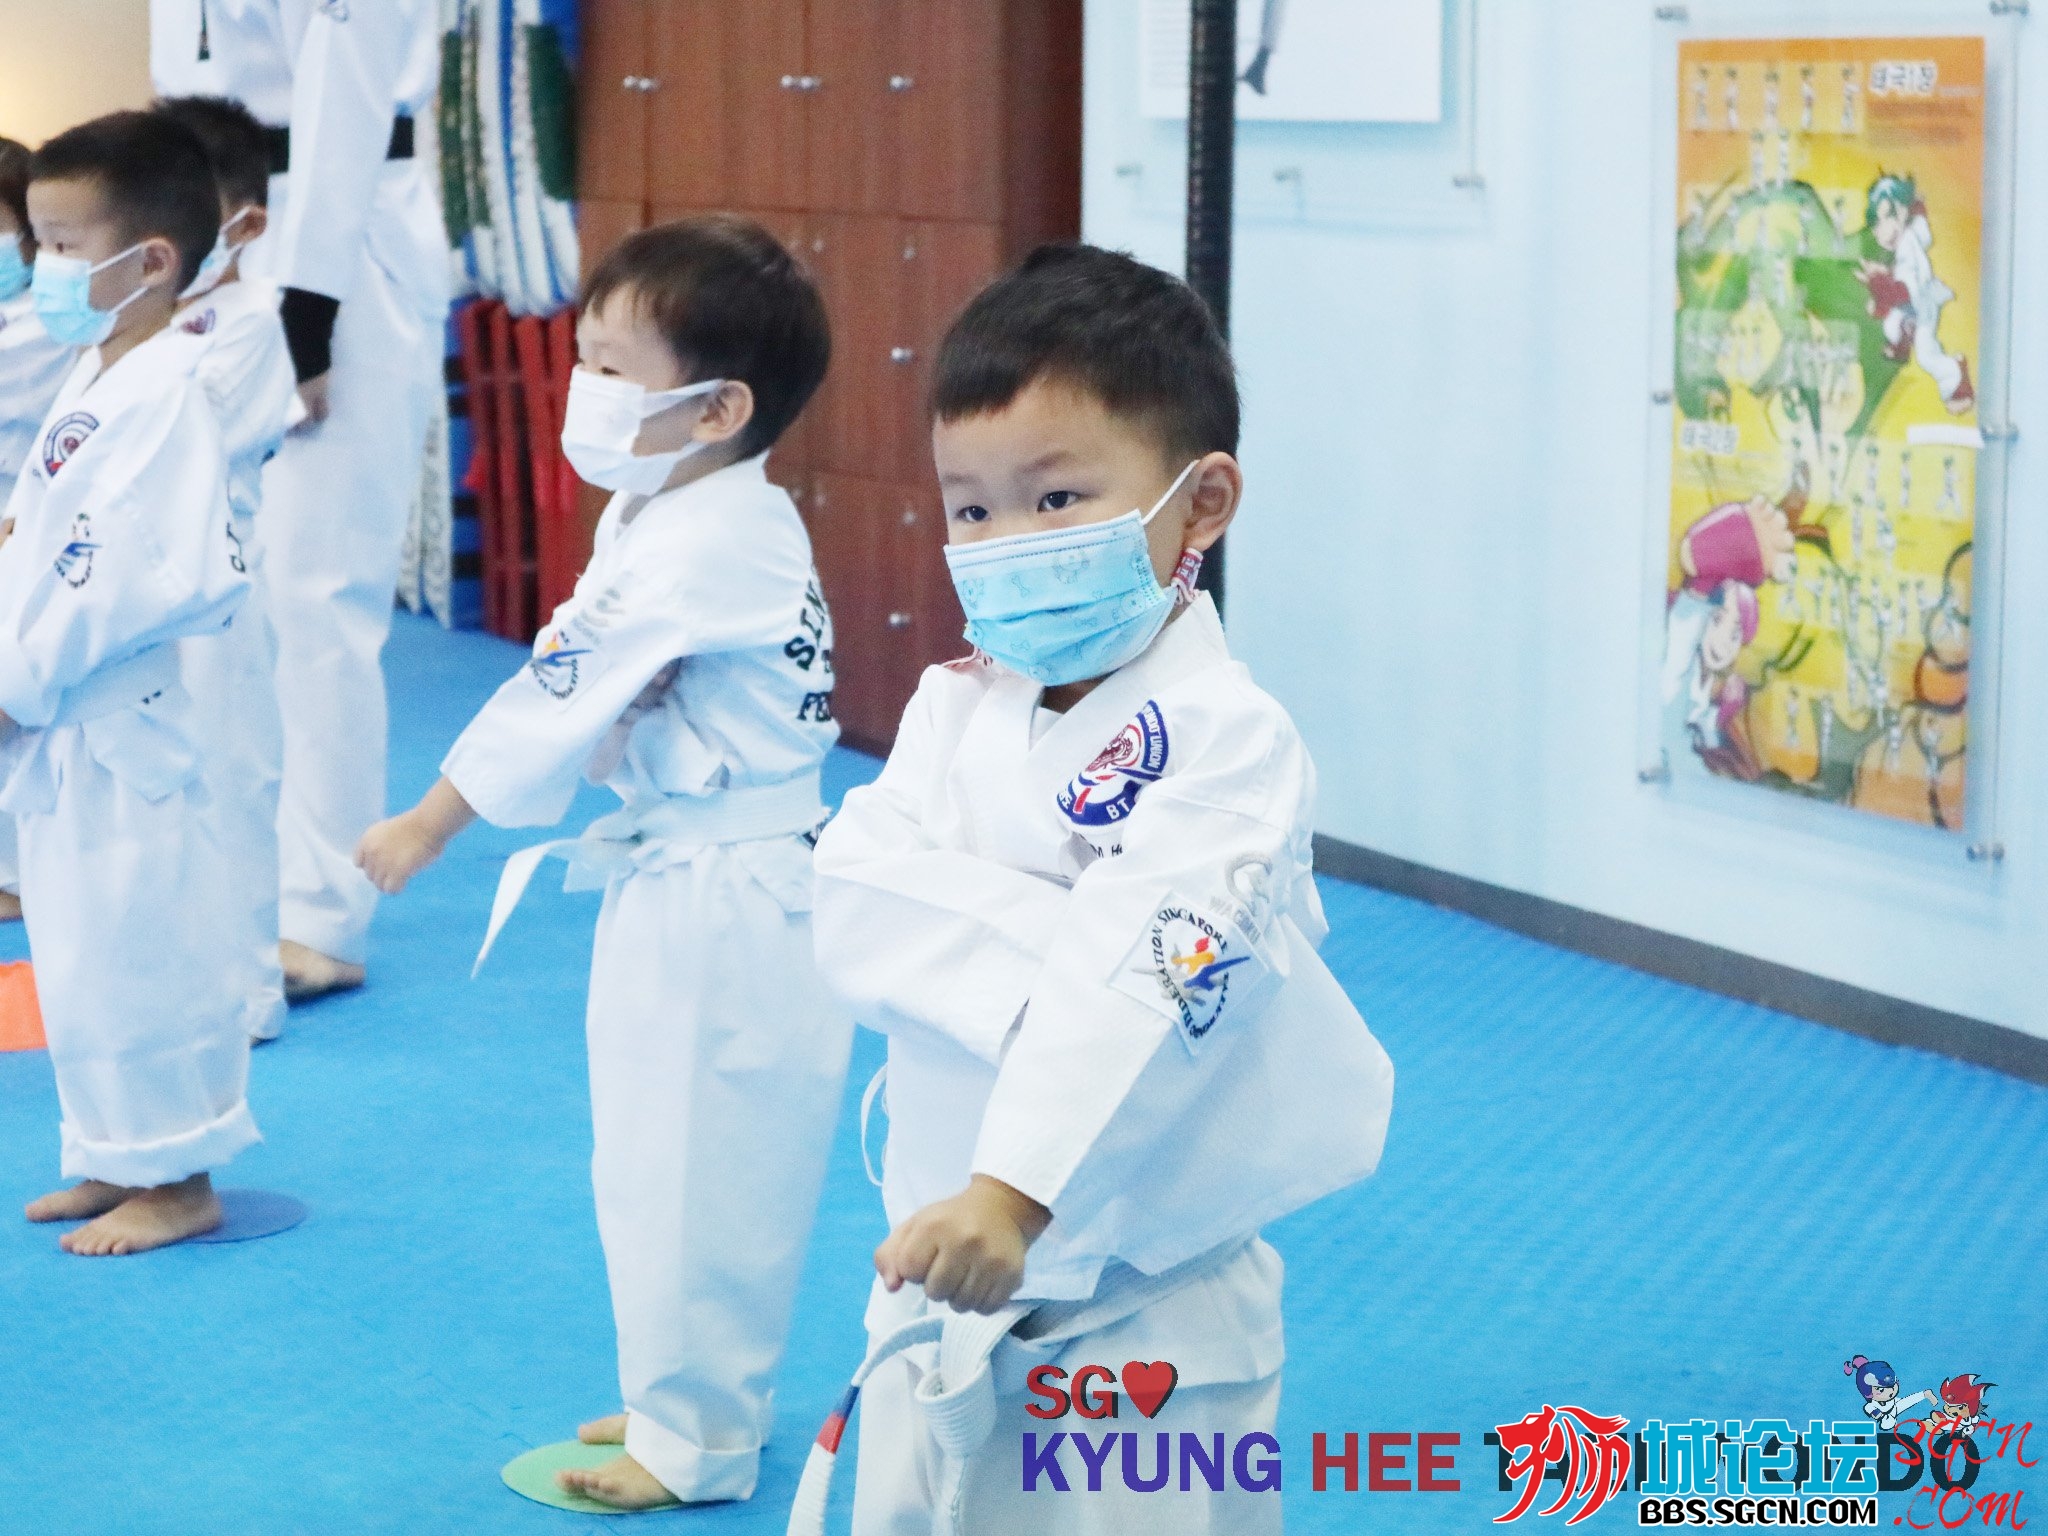 Kyunghee Taekwondo 4.jpg